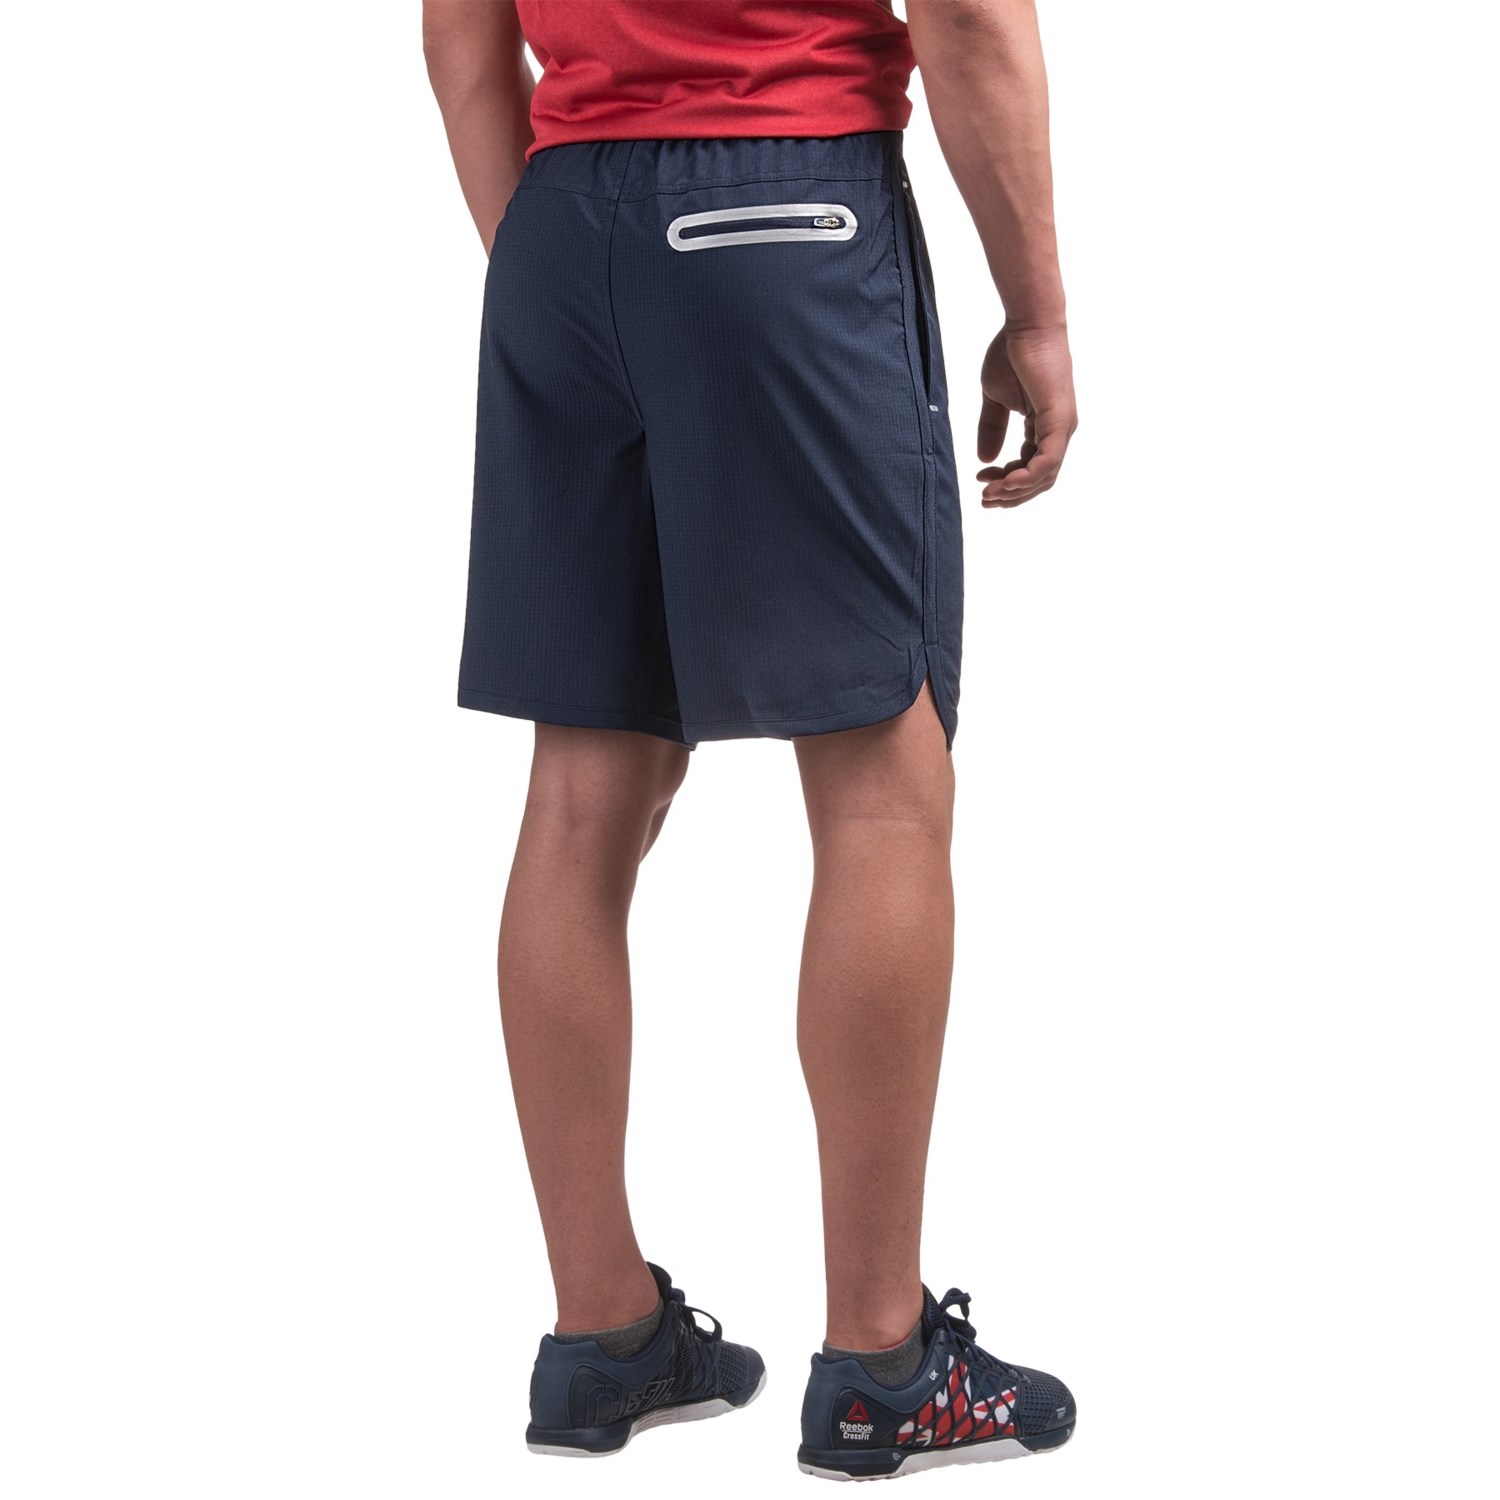 Reebok Paceline Training Shorts (For Men) - Save 51%